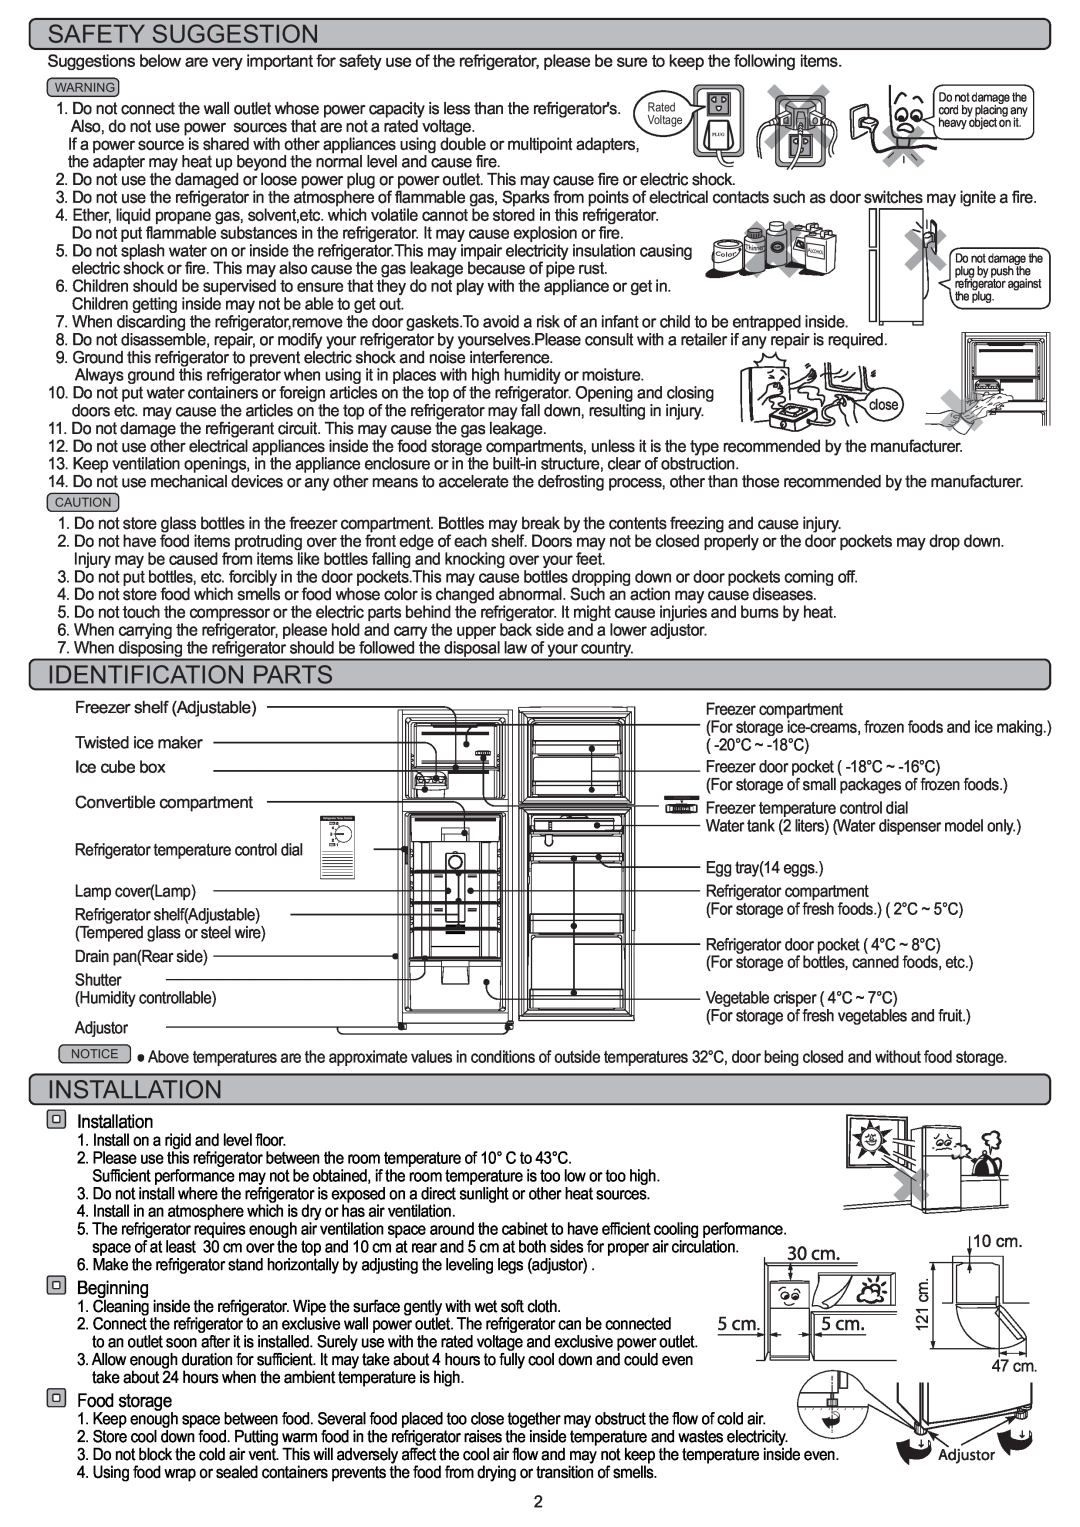 Hitachi refrigerator instruction manual Safety Suggestion, Identification Parts, Installation, Beginning 